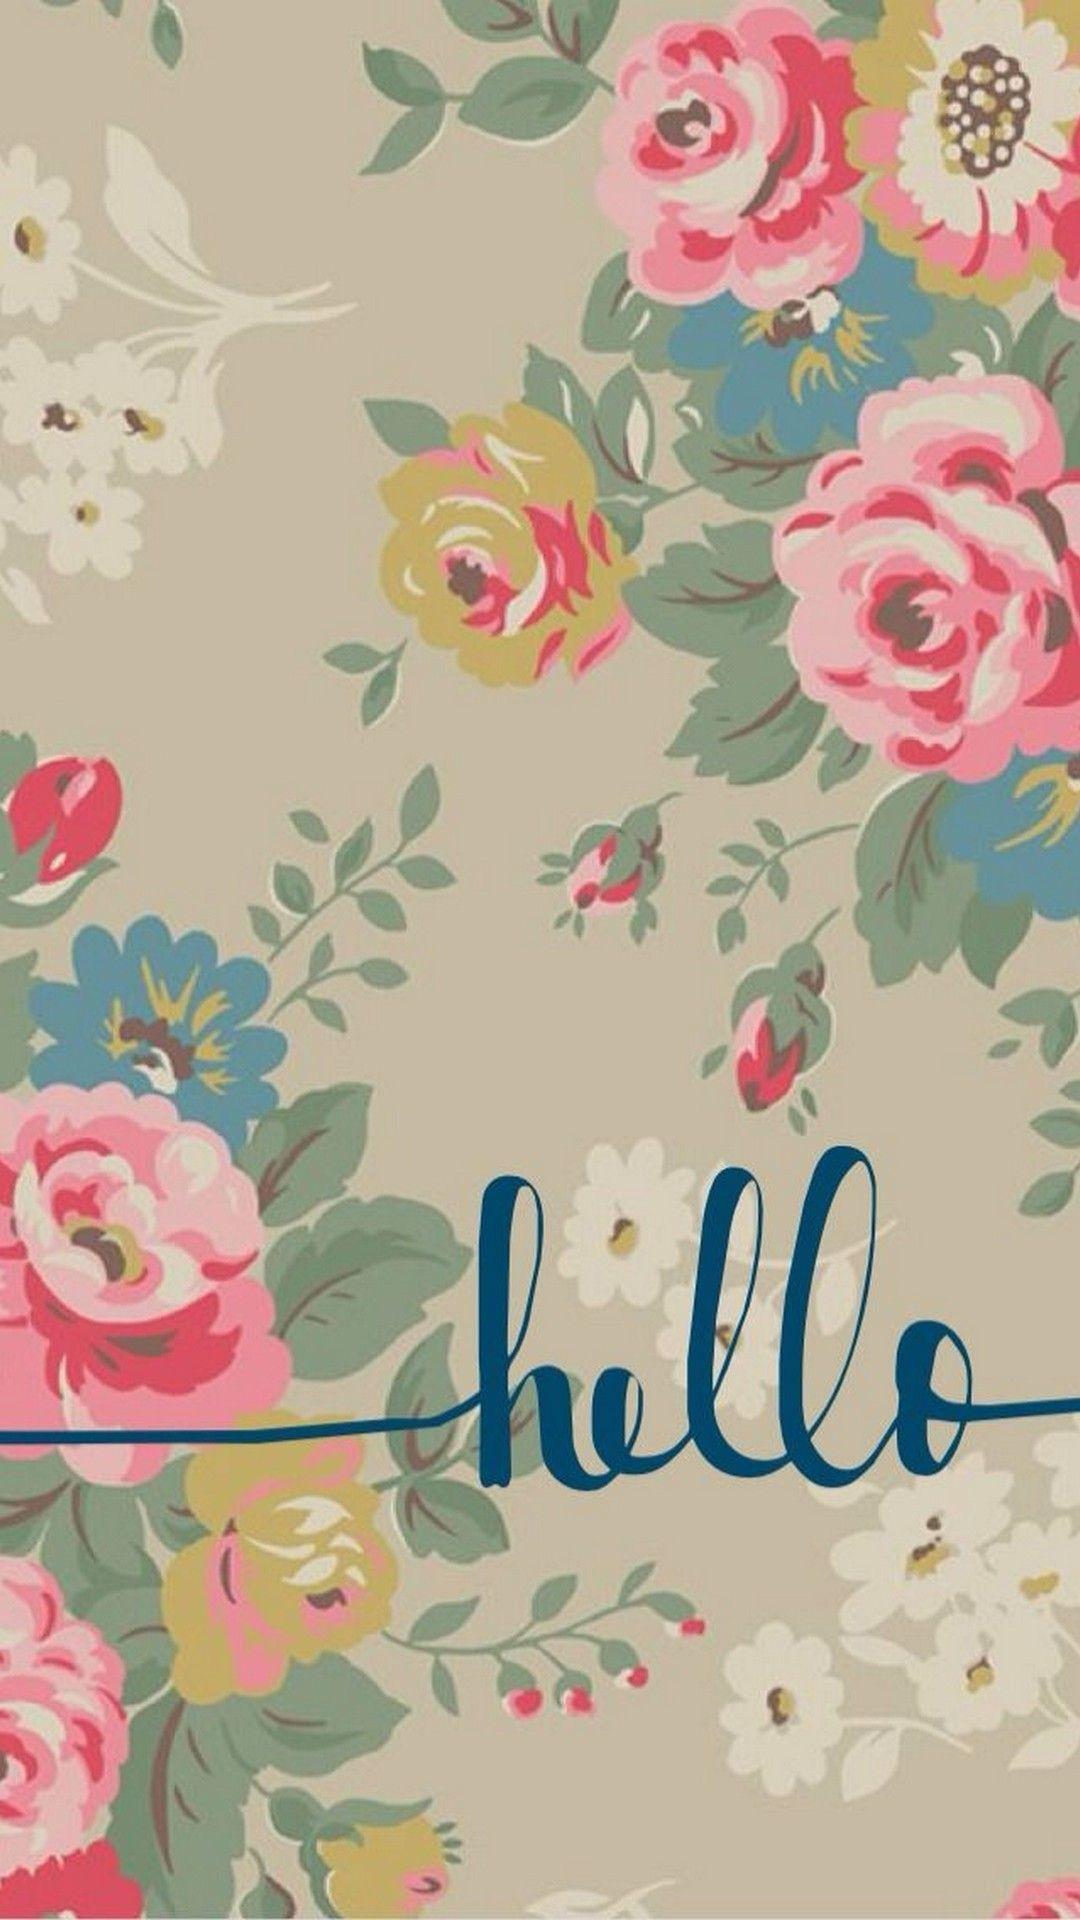 Cute Flower Phone Background. Best HD Wallpaper. Wallpapercute